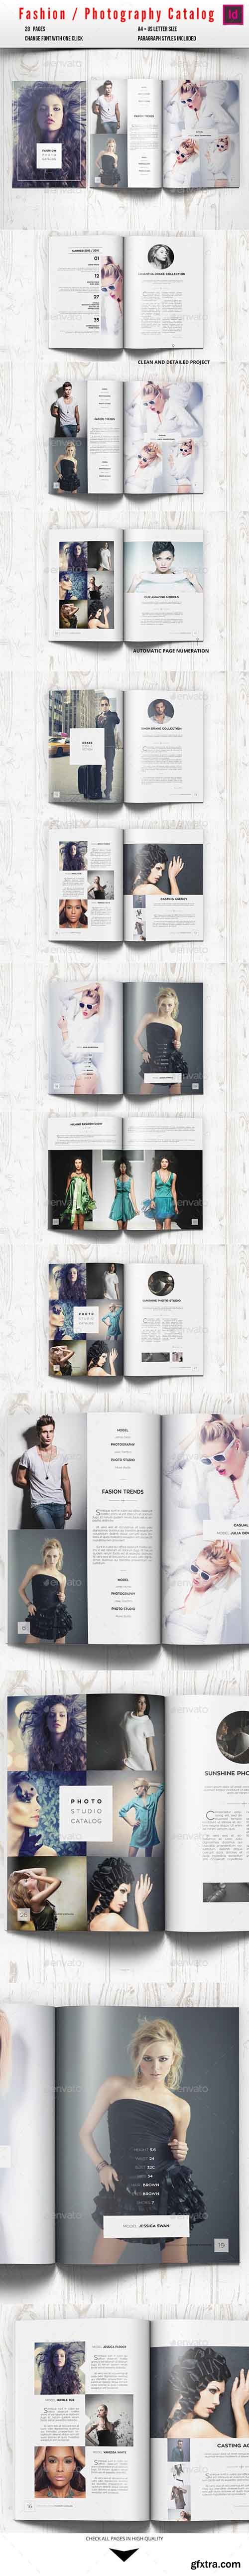 GR - Fashion Photography Catalog / Brochure 10277338